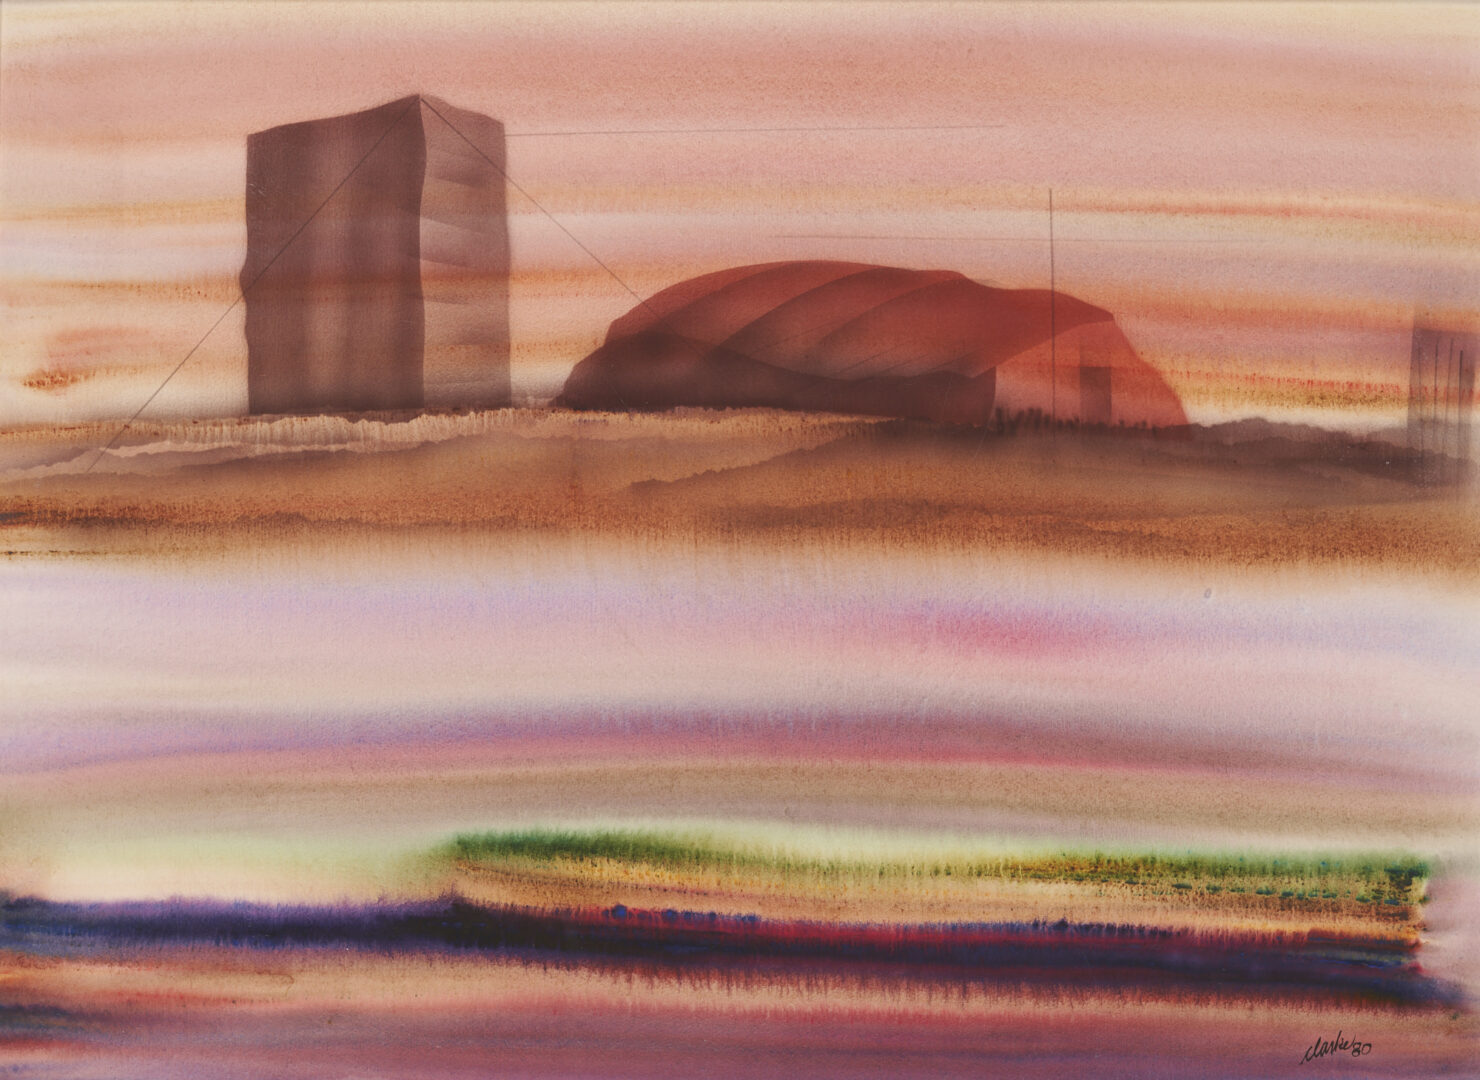 Lot 519: Pair of Richard Clarke Surrealist W/C Paintings, 1980